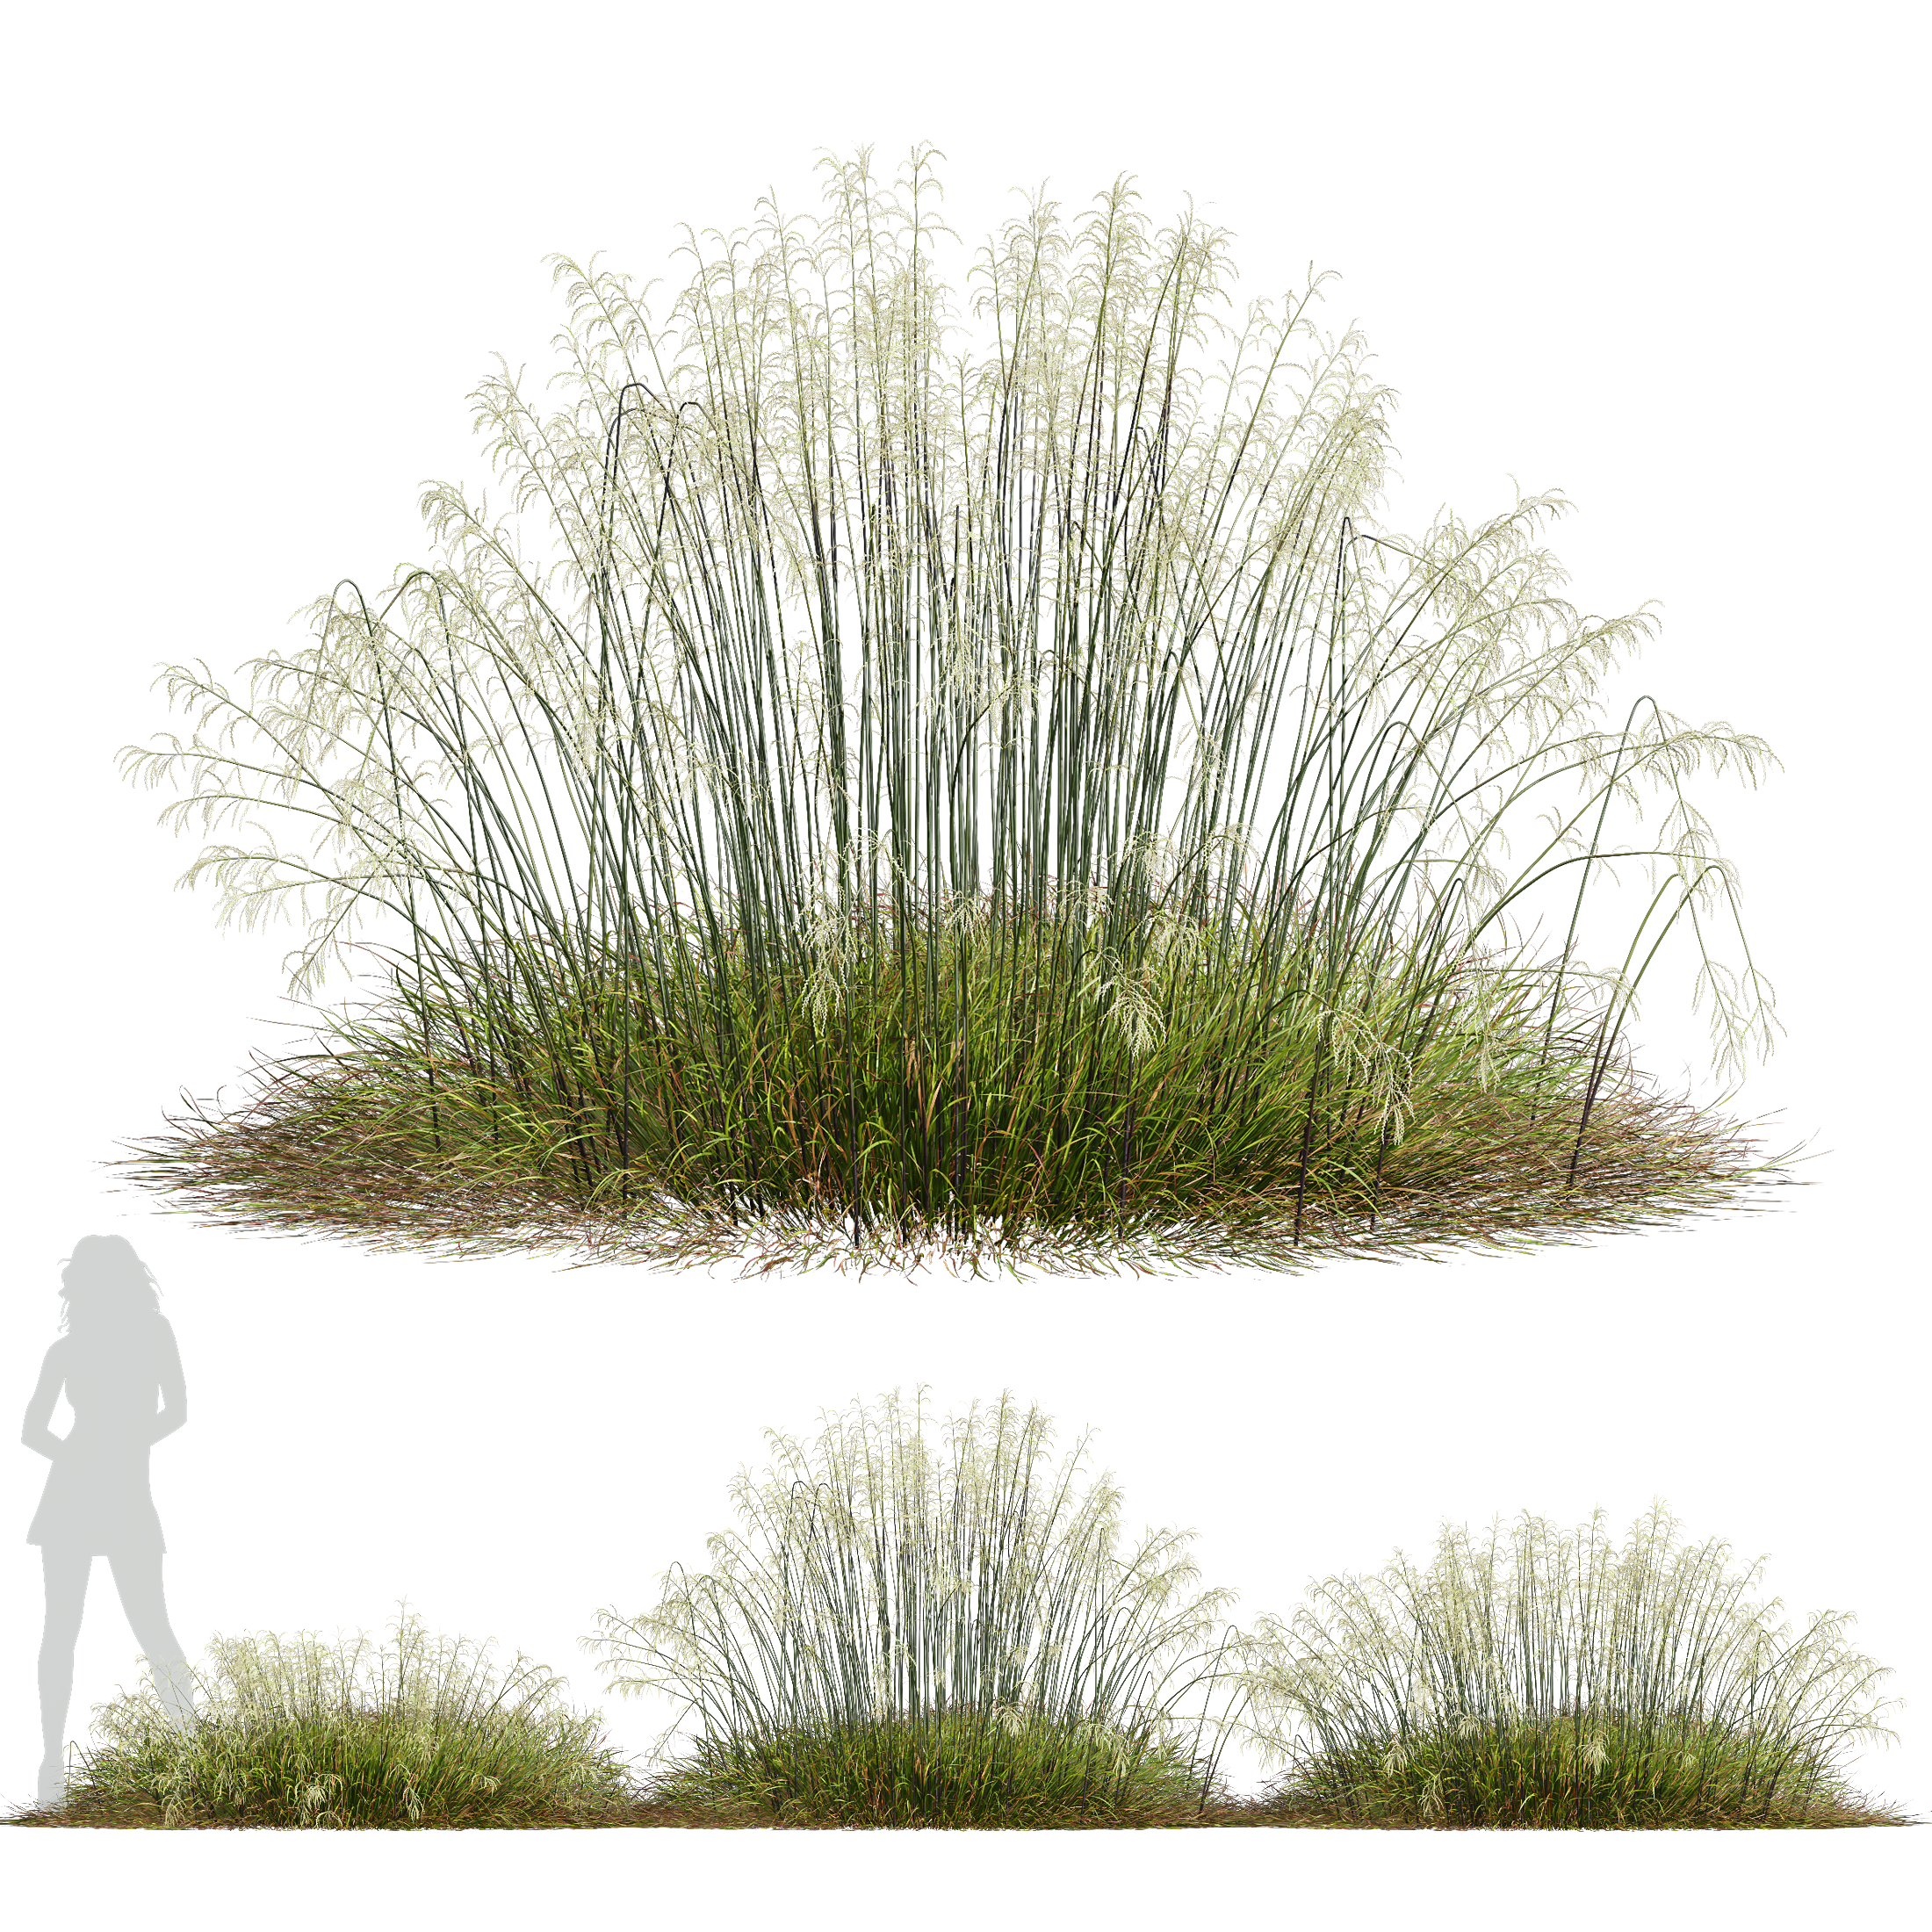 HQ Plants Stipa arundinacea Sweet Grass Wide